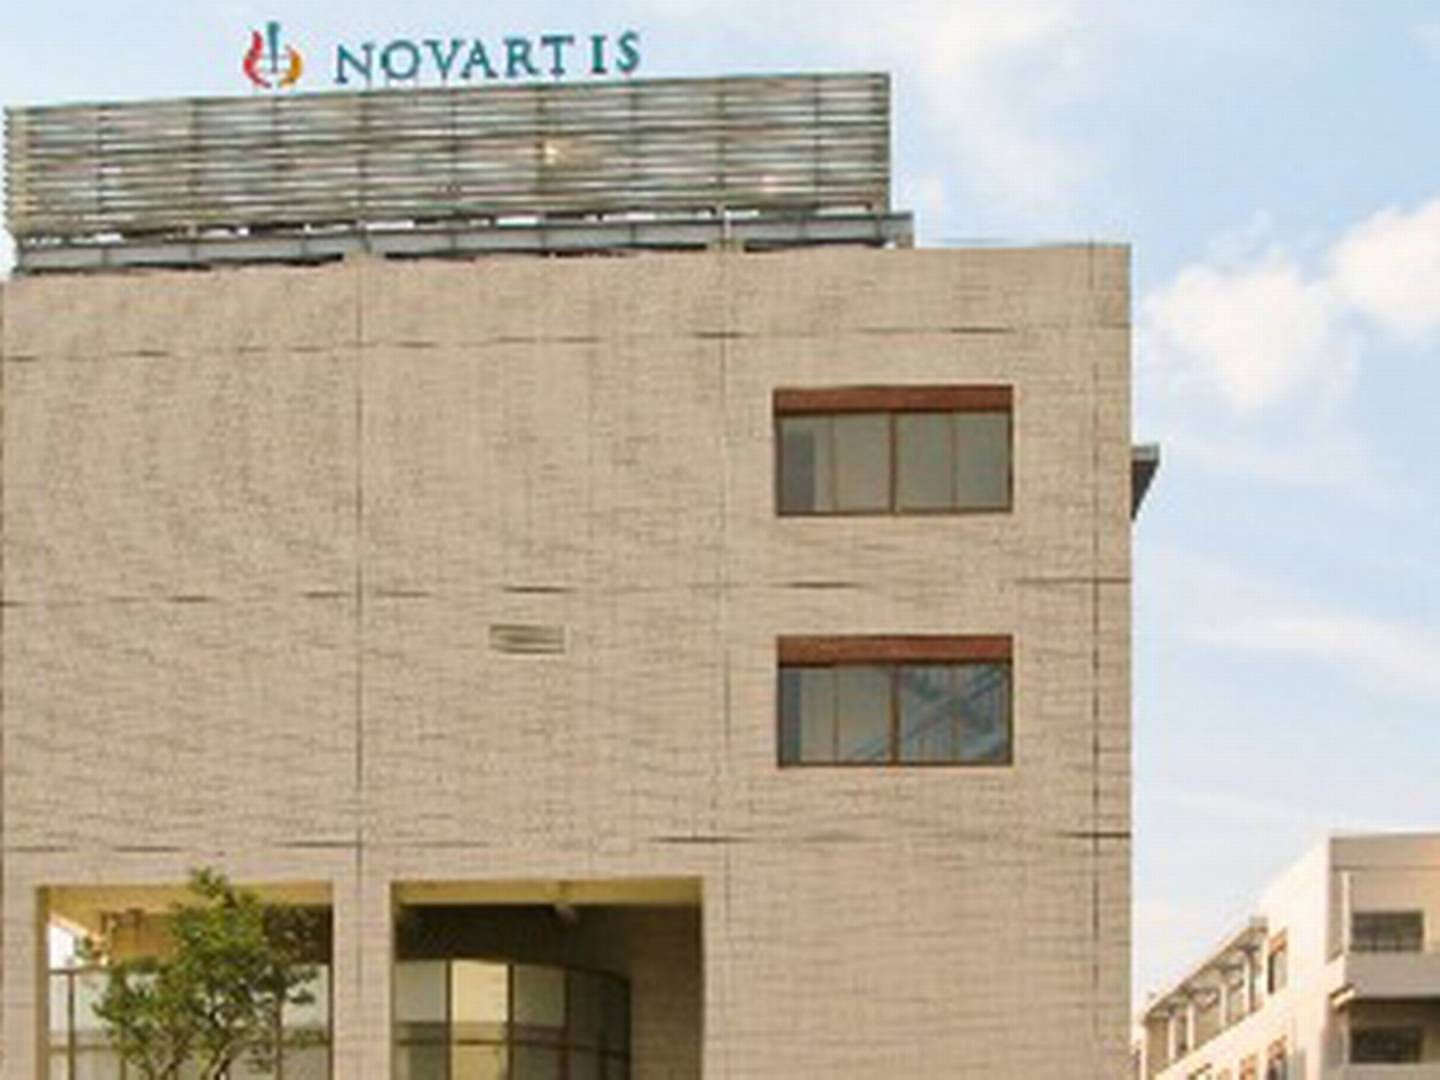 Foto: Novartis AG